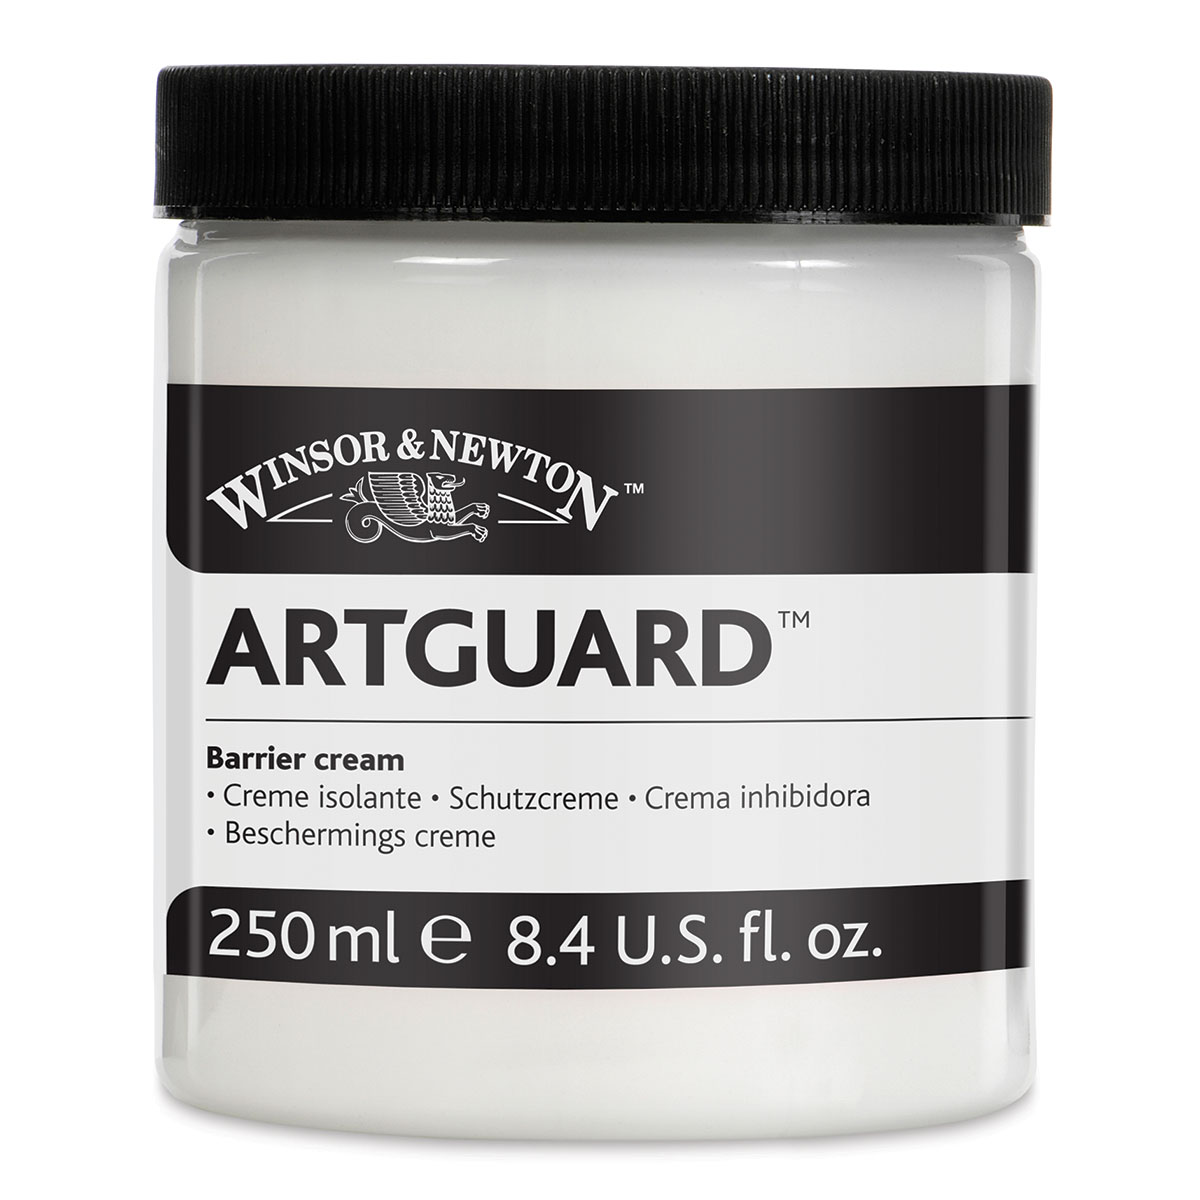 Winsor &#x26; Newton Artguard Barrier Cream - 250 ml Jar